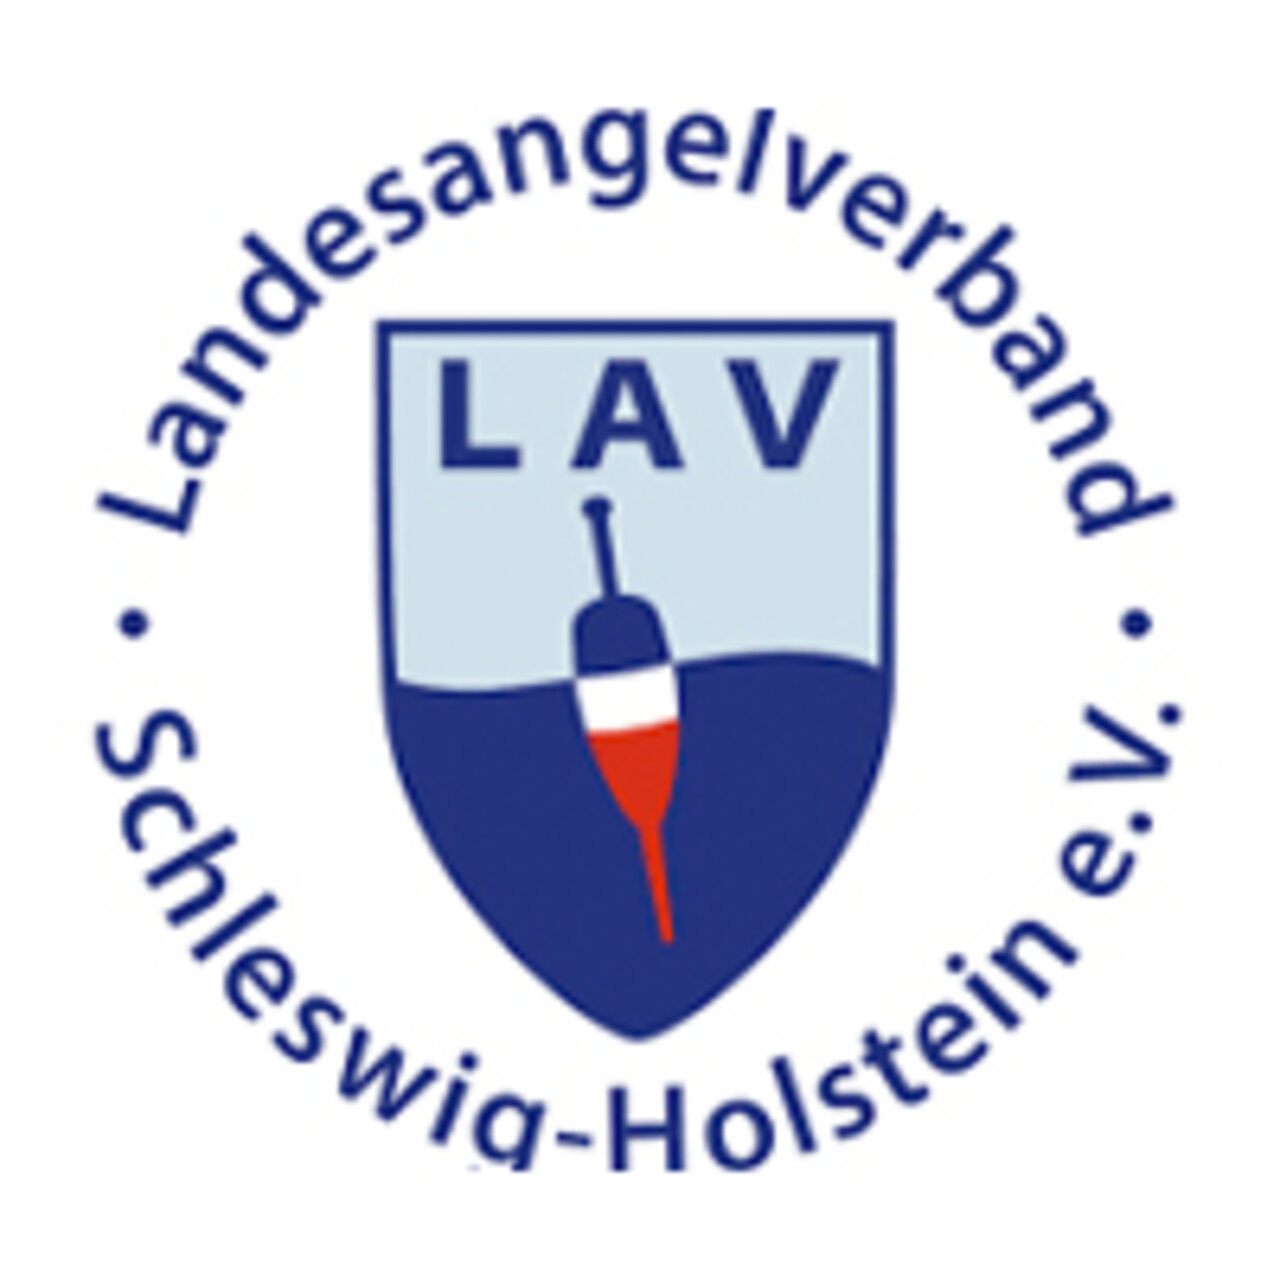 Verbandslogo Landesanglerverband Schleswig-Holstein e.V.